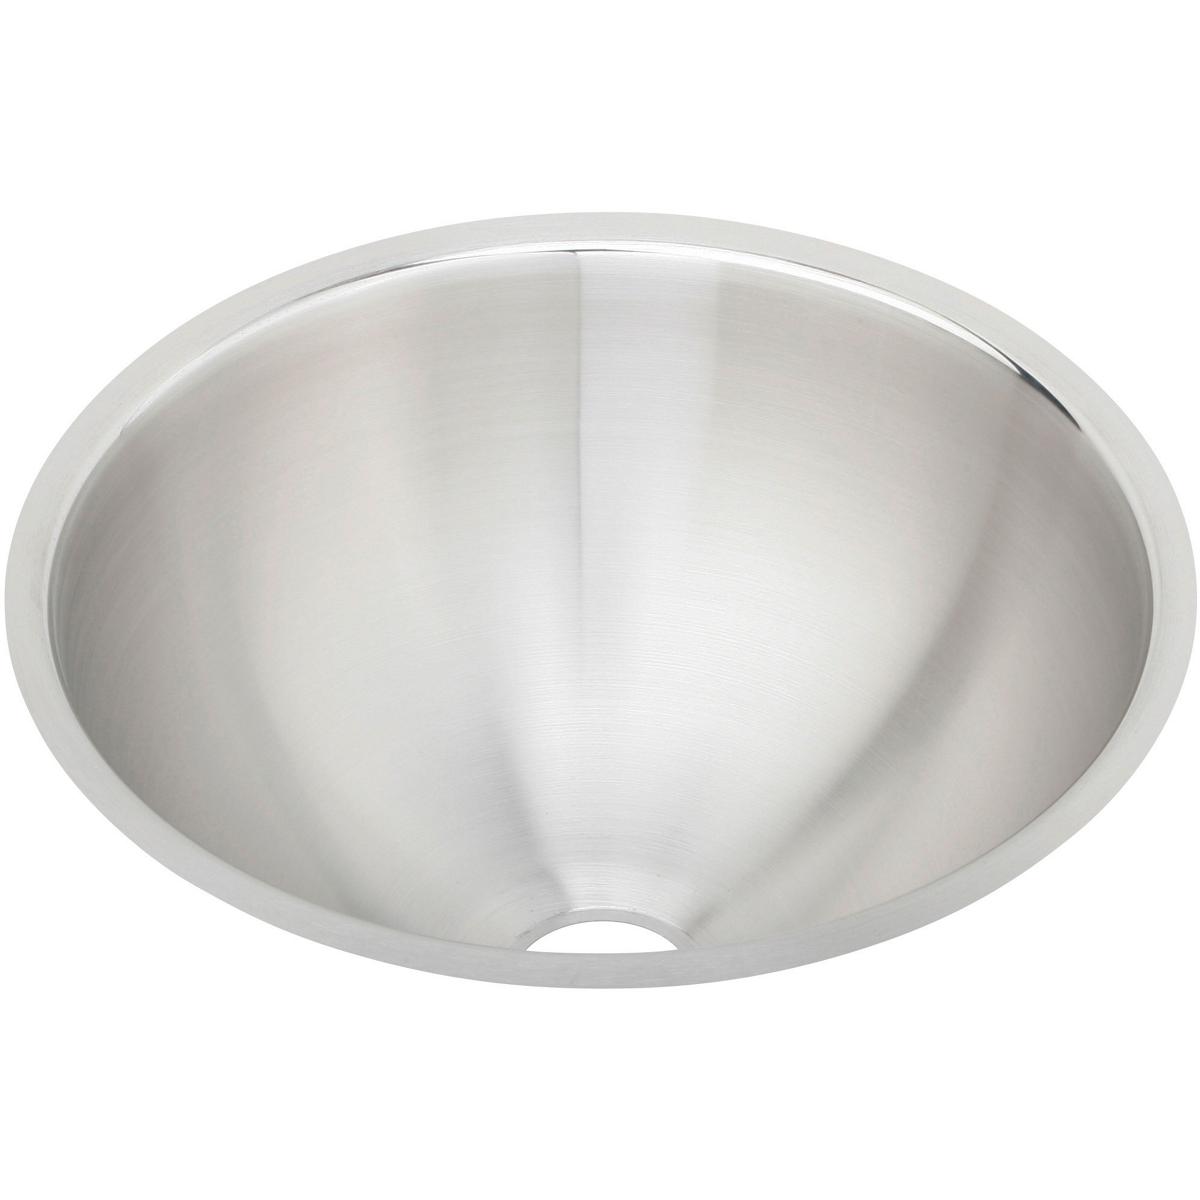 Elkay Asana Stainless Steel 14-3/8" x 14-3/8" x 6" Single Bowl Undermount Bathroom Sink